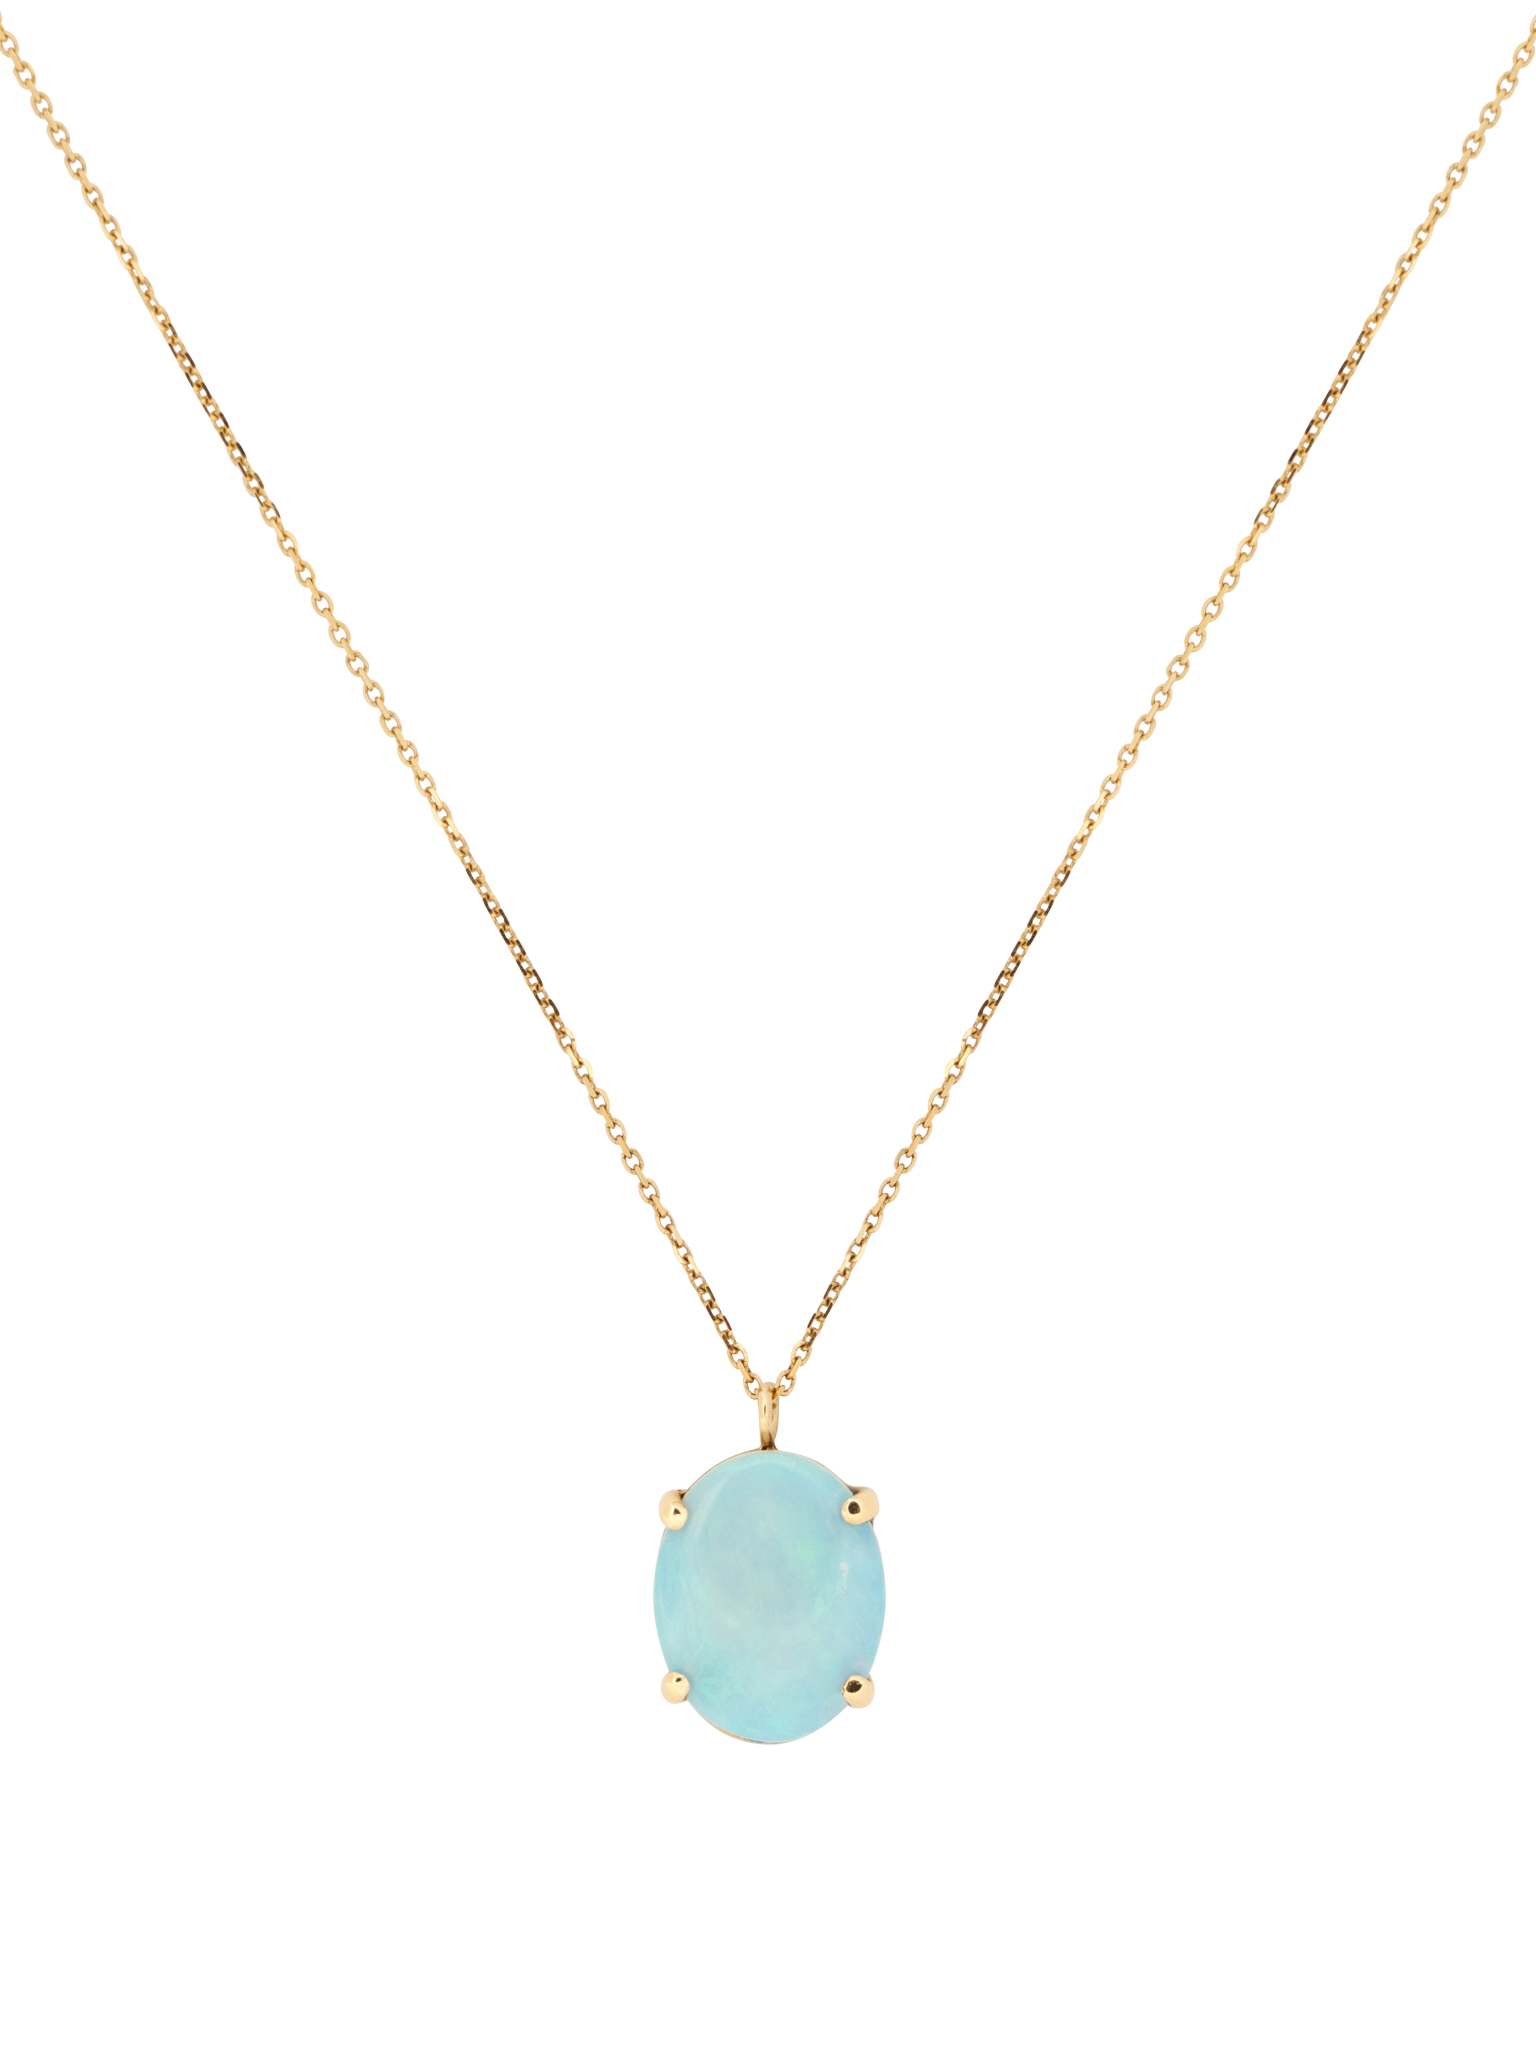 Large oval opal pendant